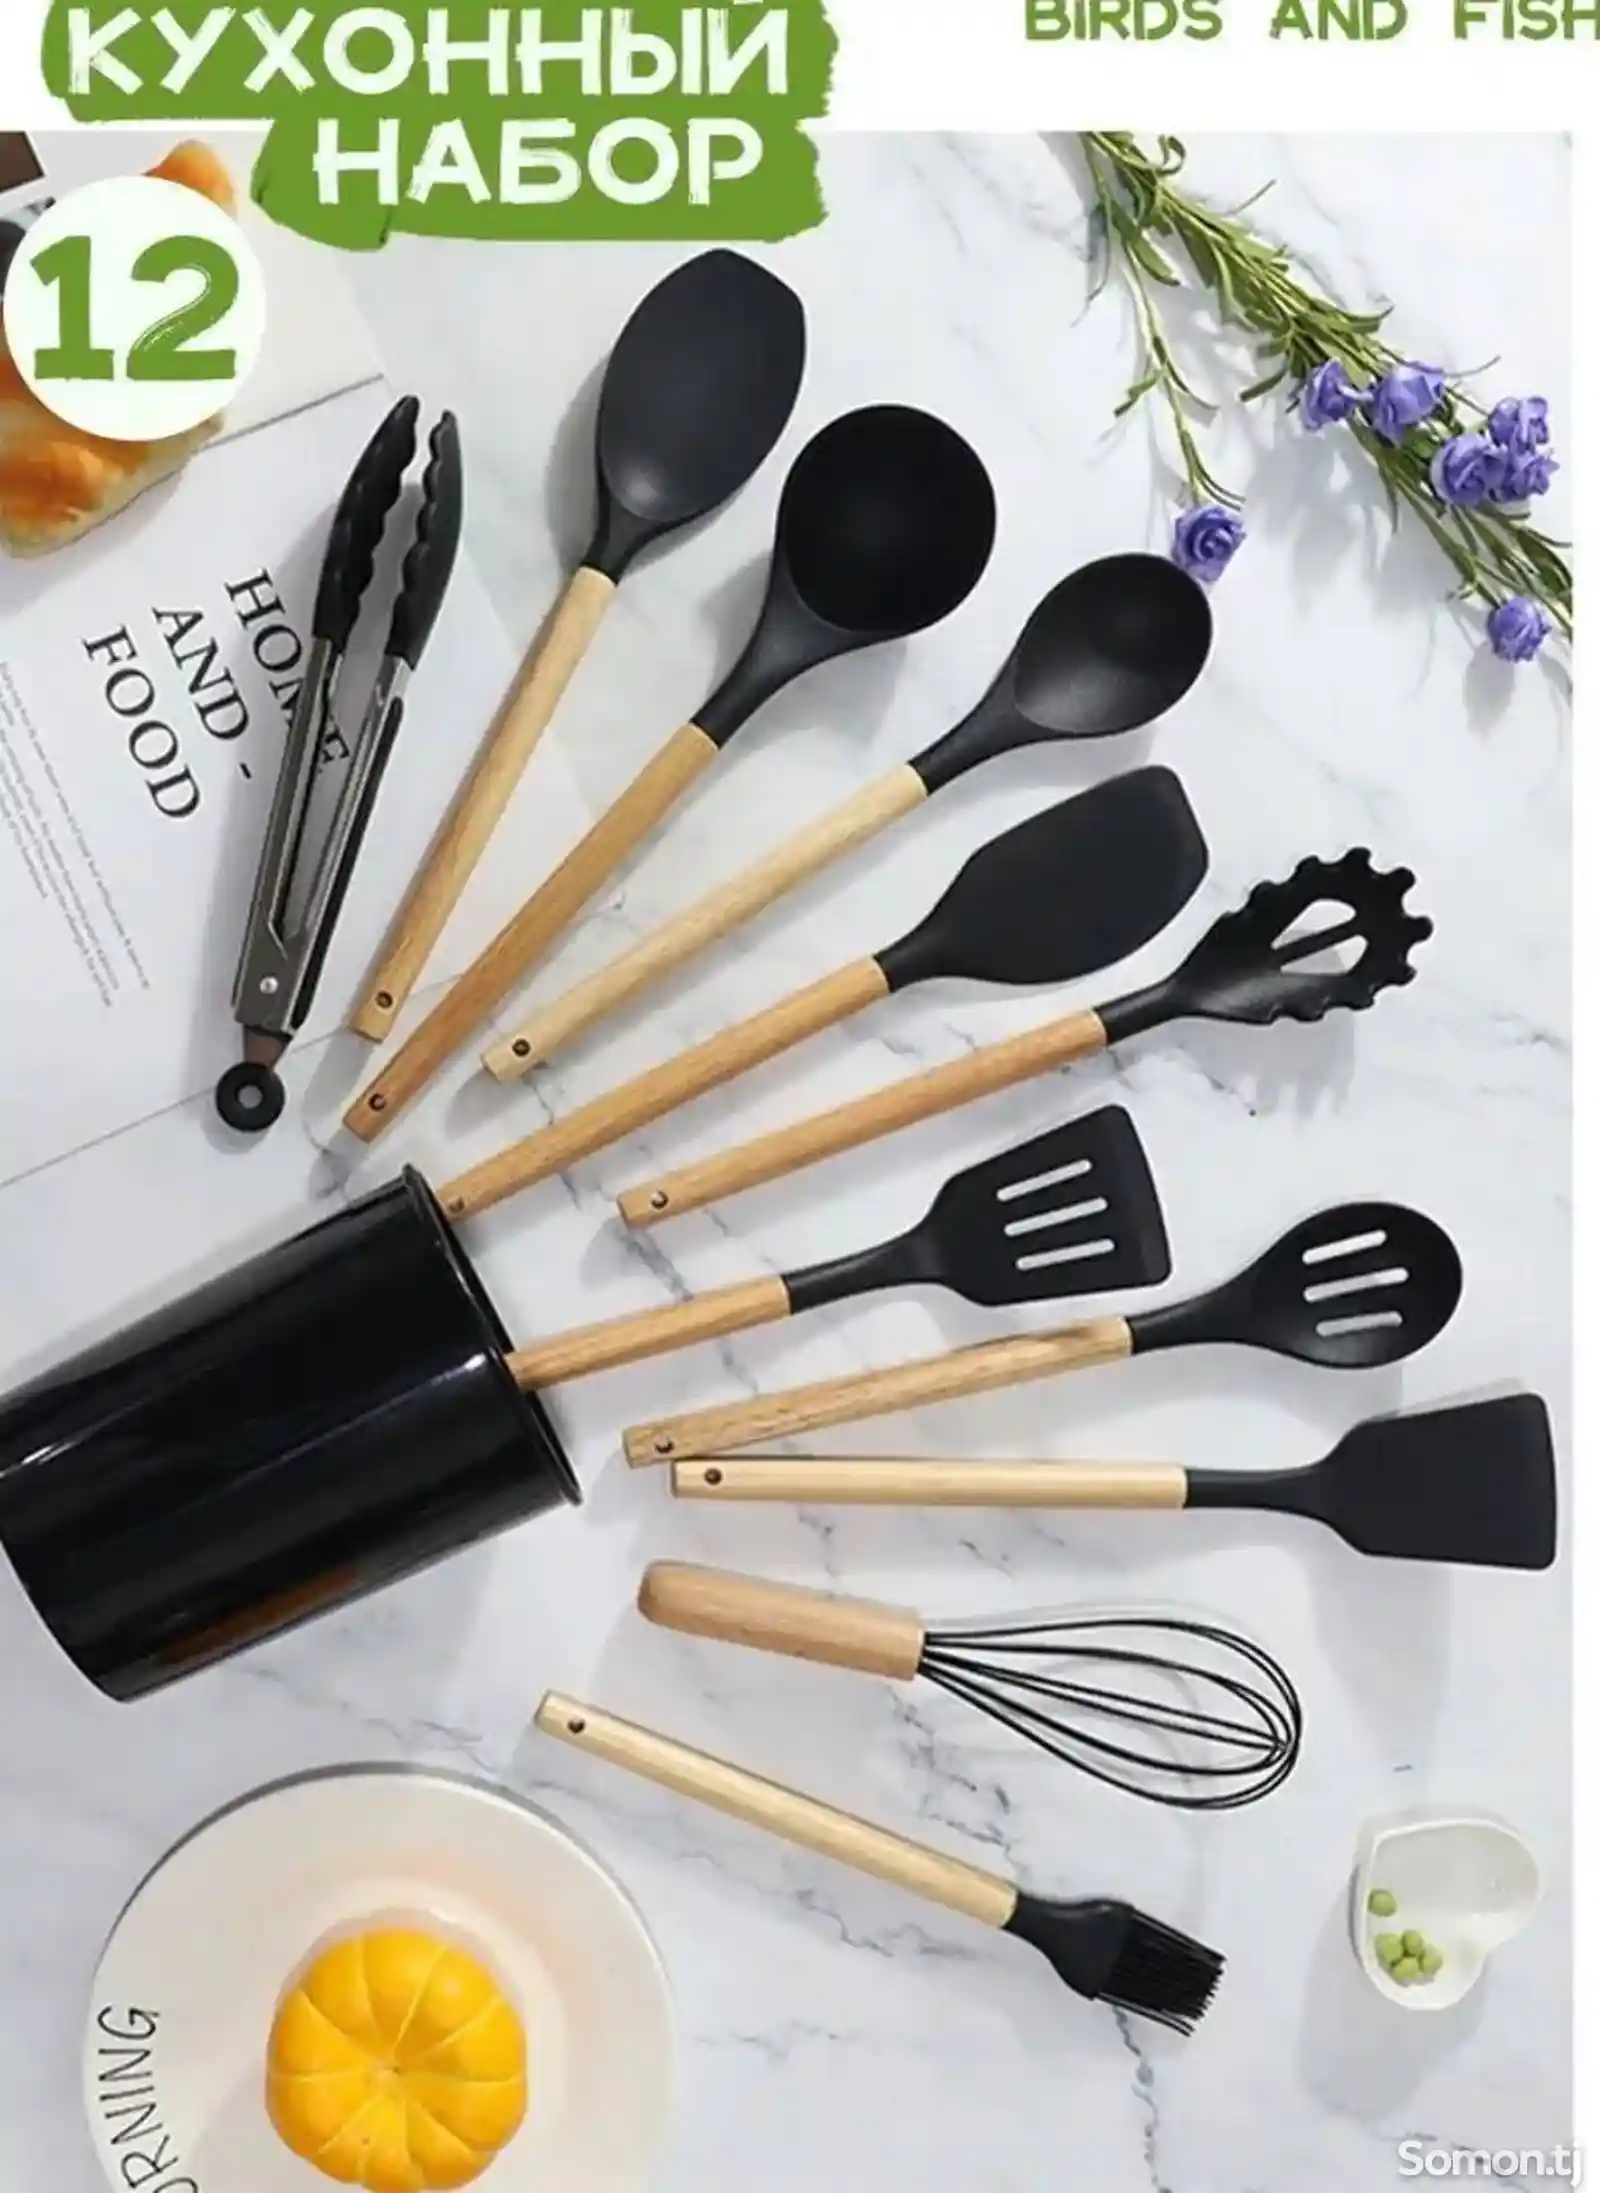 Кухонный набор kitchen utensils-1